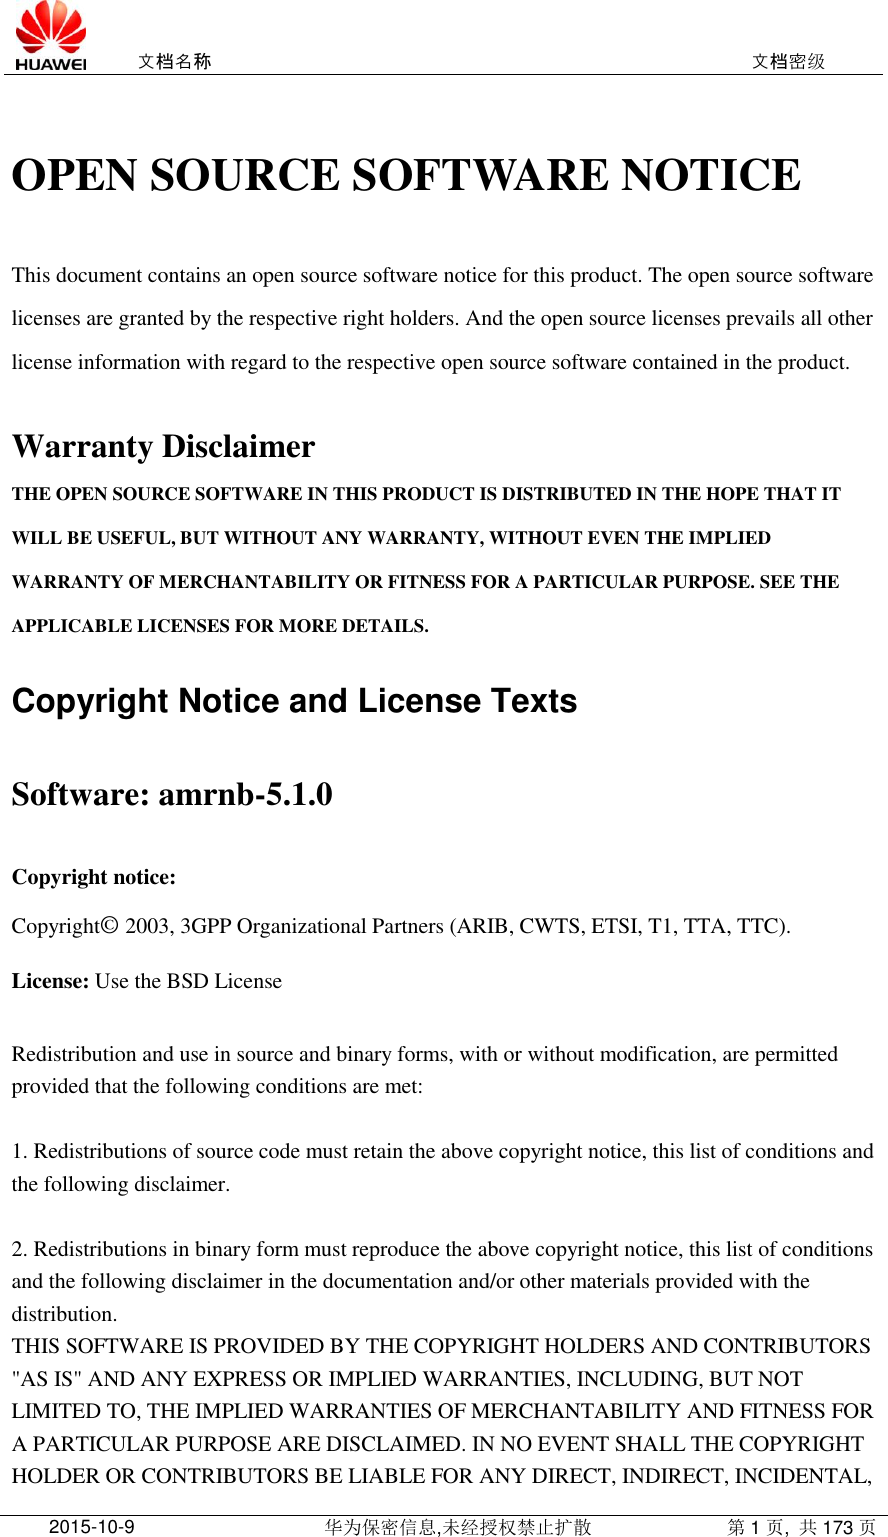 Huawei E3272E3276 OPEN SOURCE SOFTWARE NOTICE(stick) - 